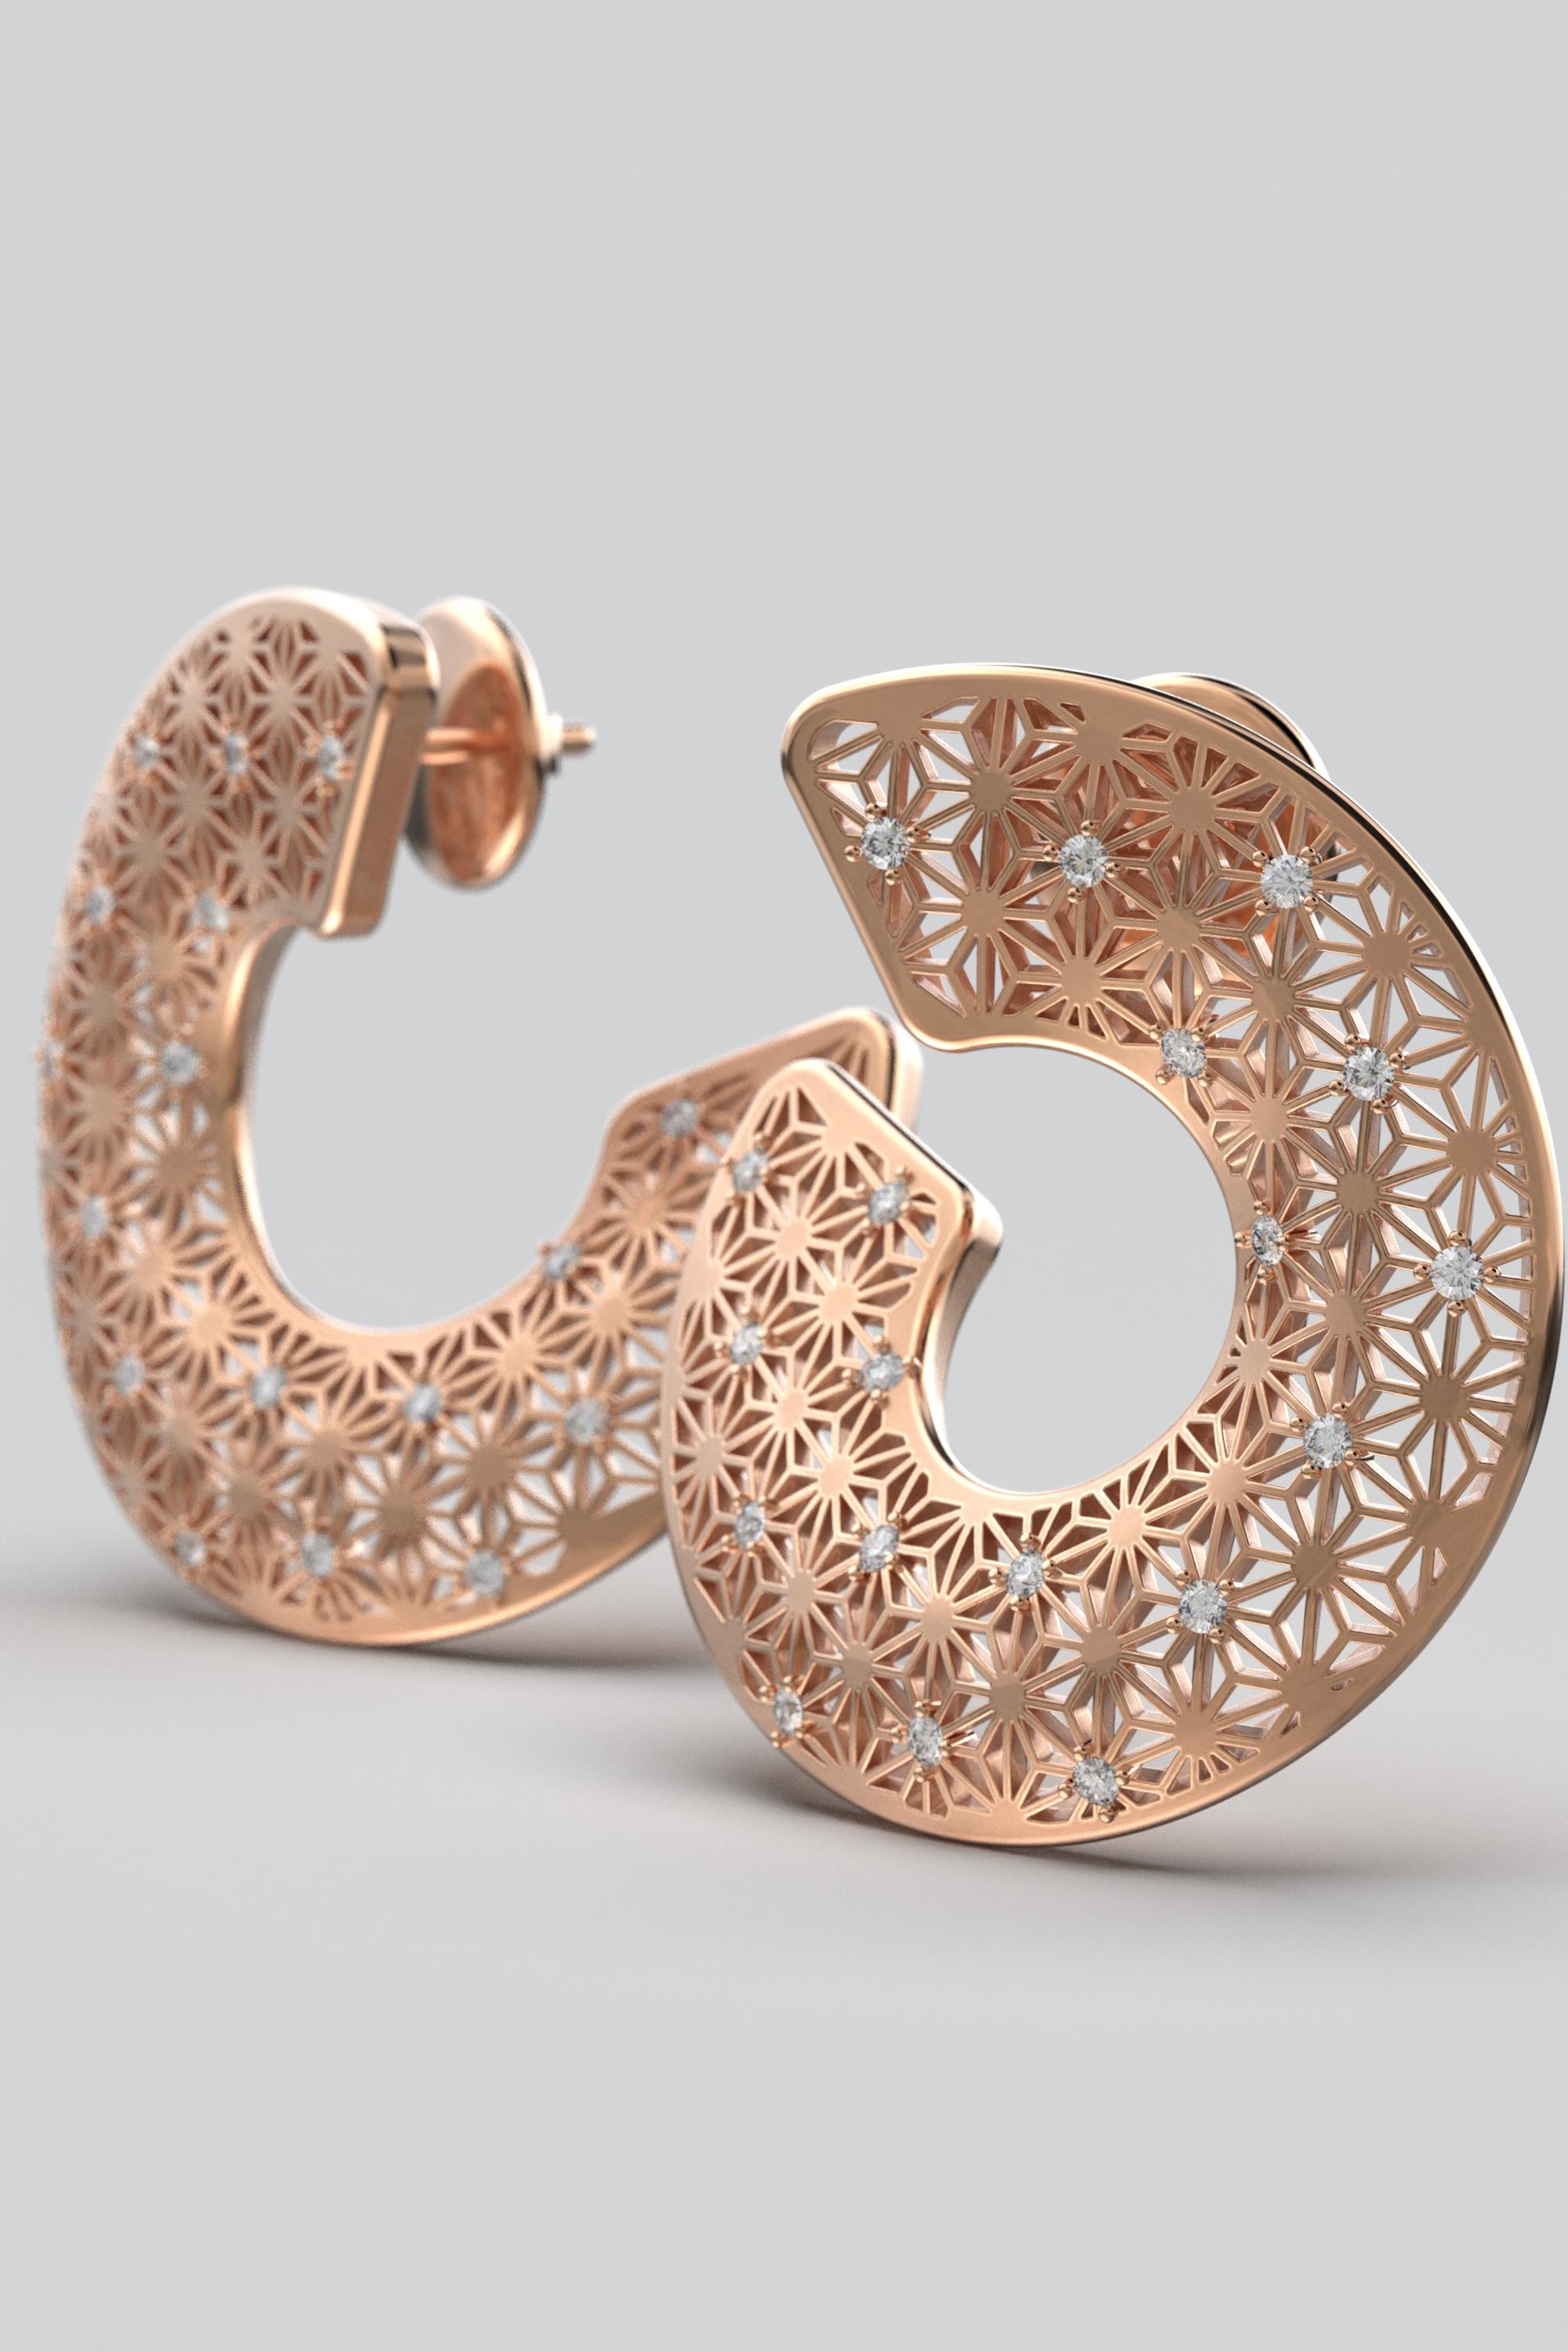 Statement Italian Diamond Earrings in 14k Genuine Gold by Oltremare Gioielli For Sale 3